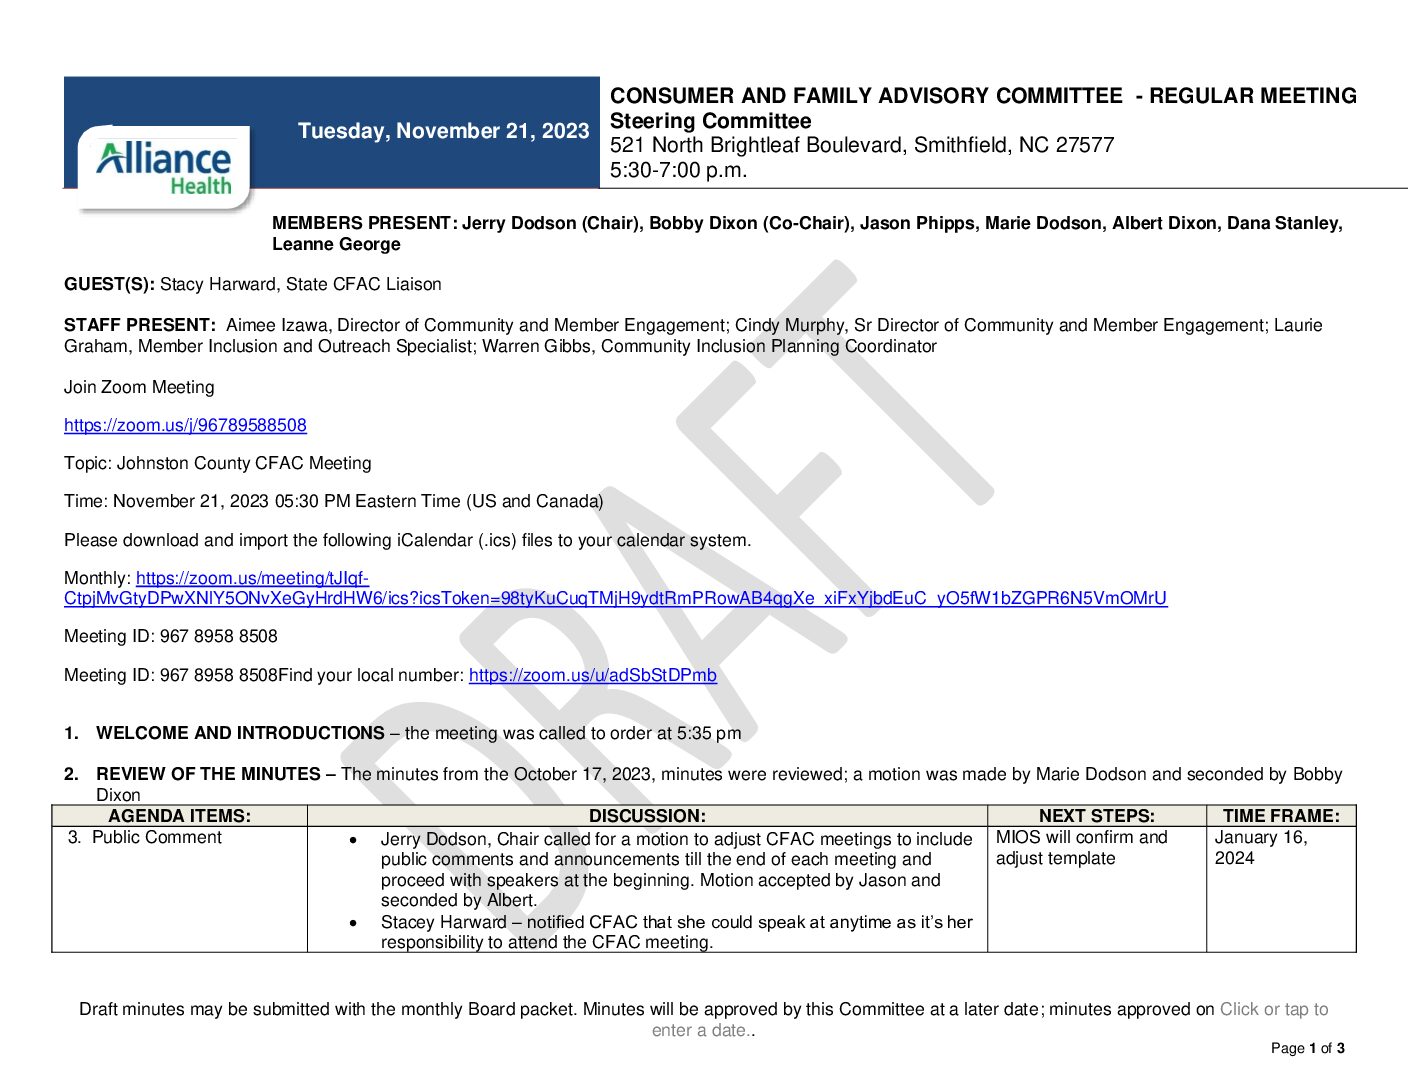 Johnston County CFAC Minutes November 2023